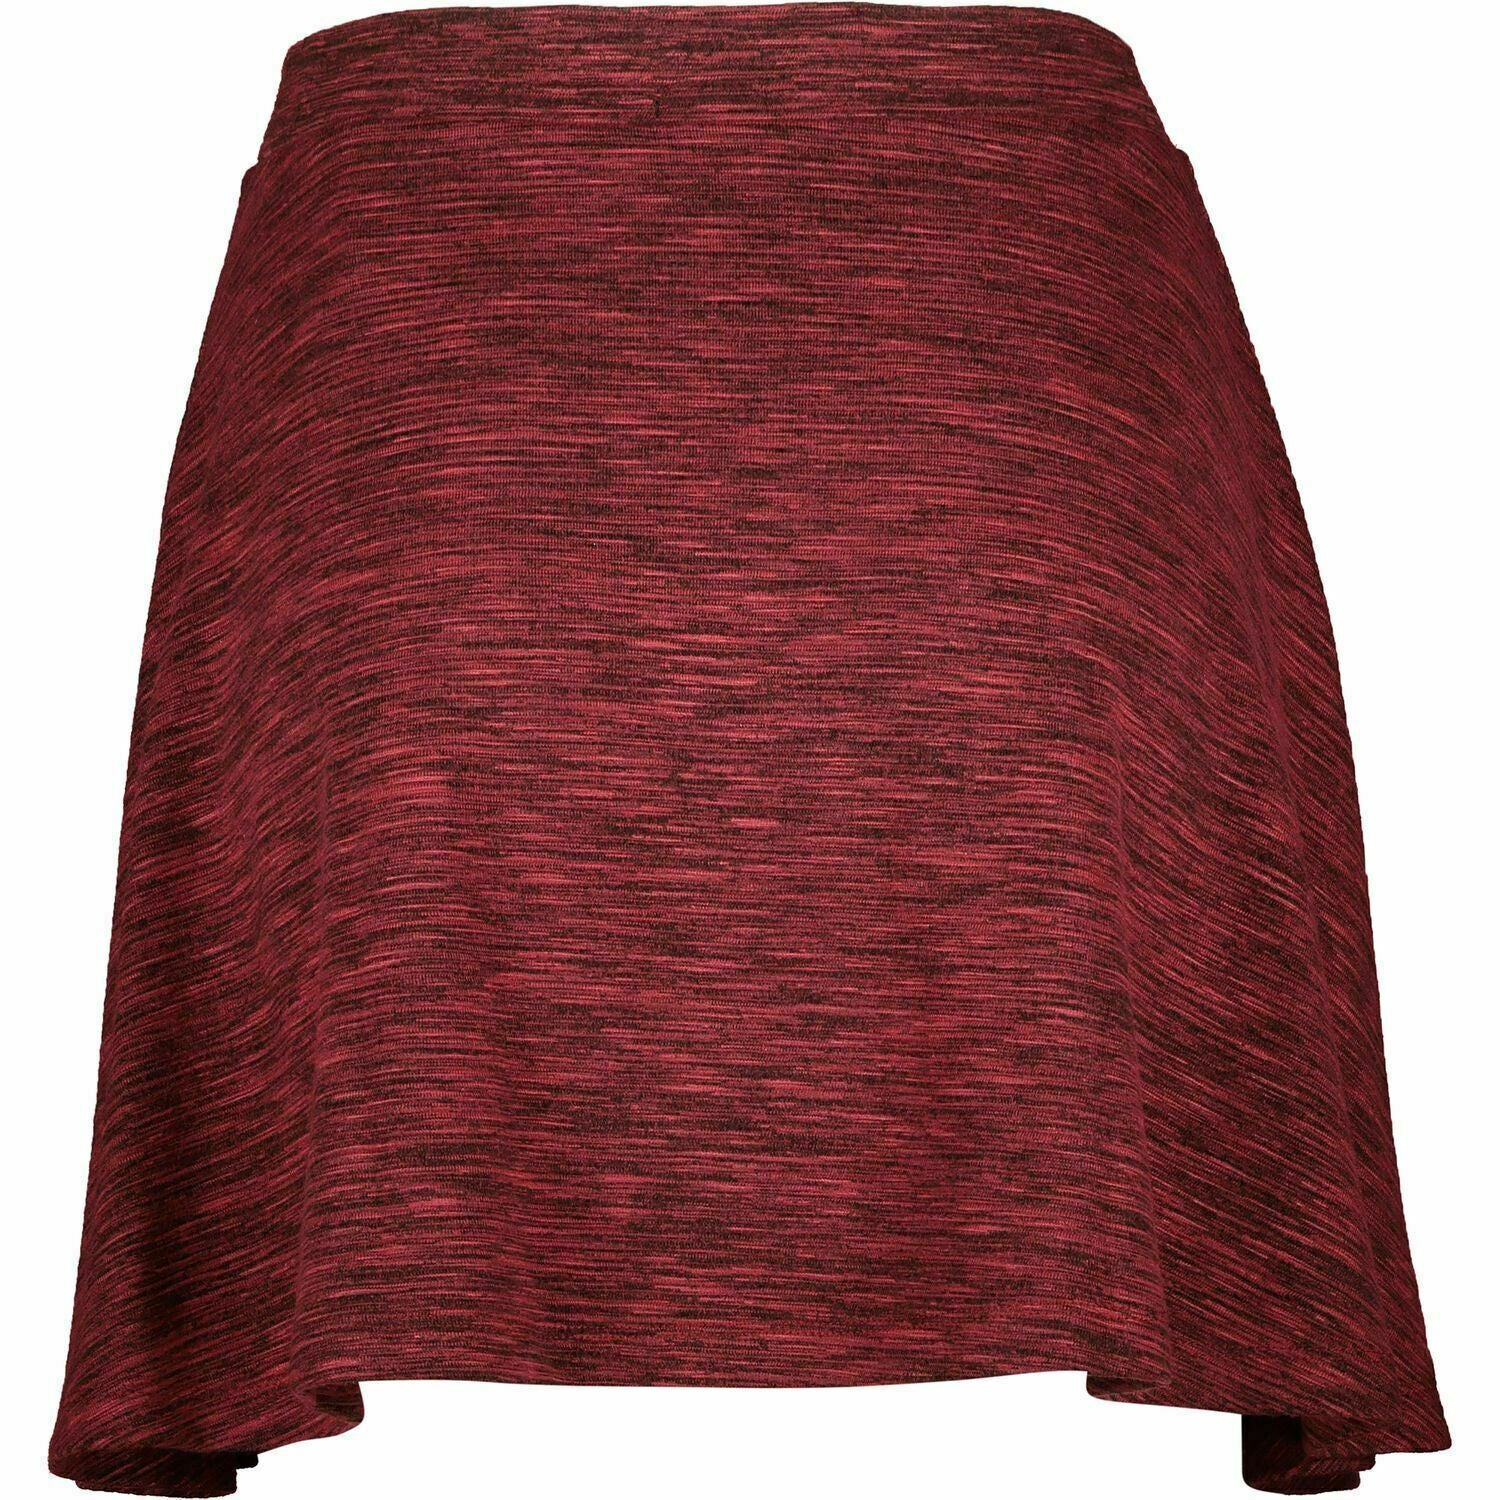 SUPERDRY Women's AUGUSTA RYDELL Skirt, Rocky Red, size M / UK 12